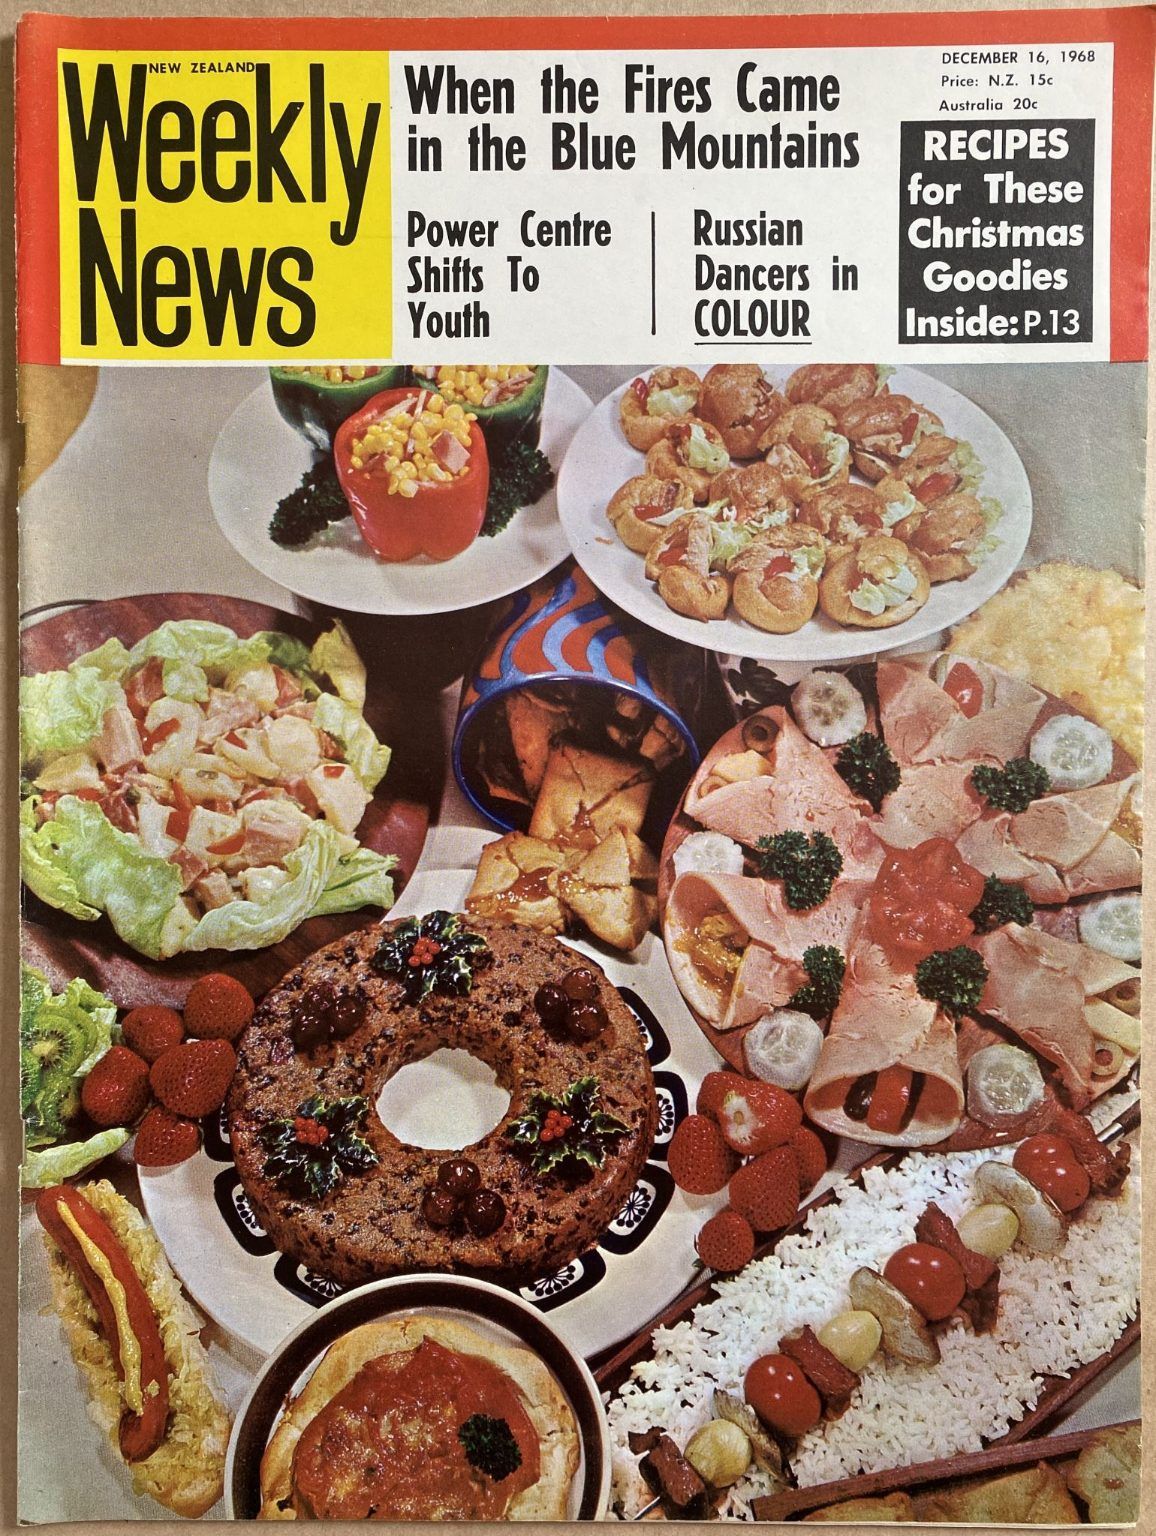 OLD NEWSPAPER: New Zealand Weekly News, 16 December 1968